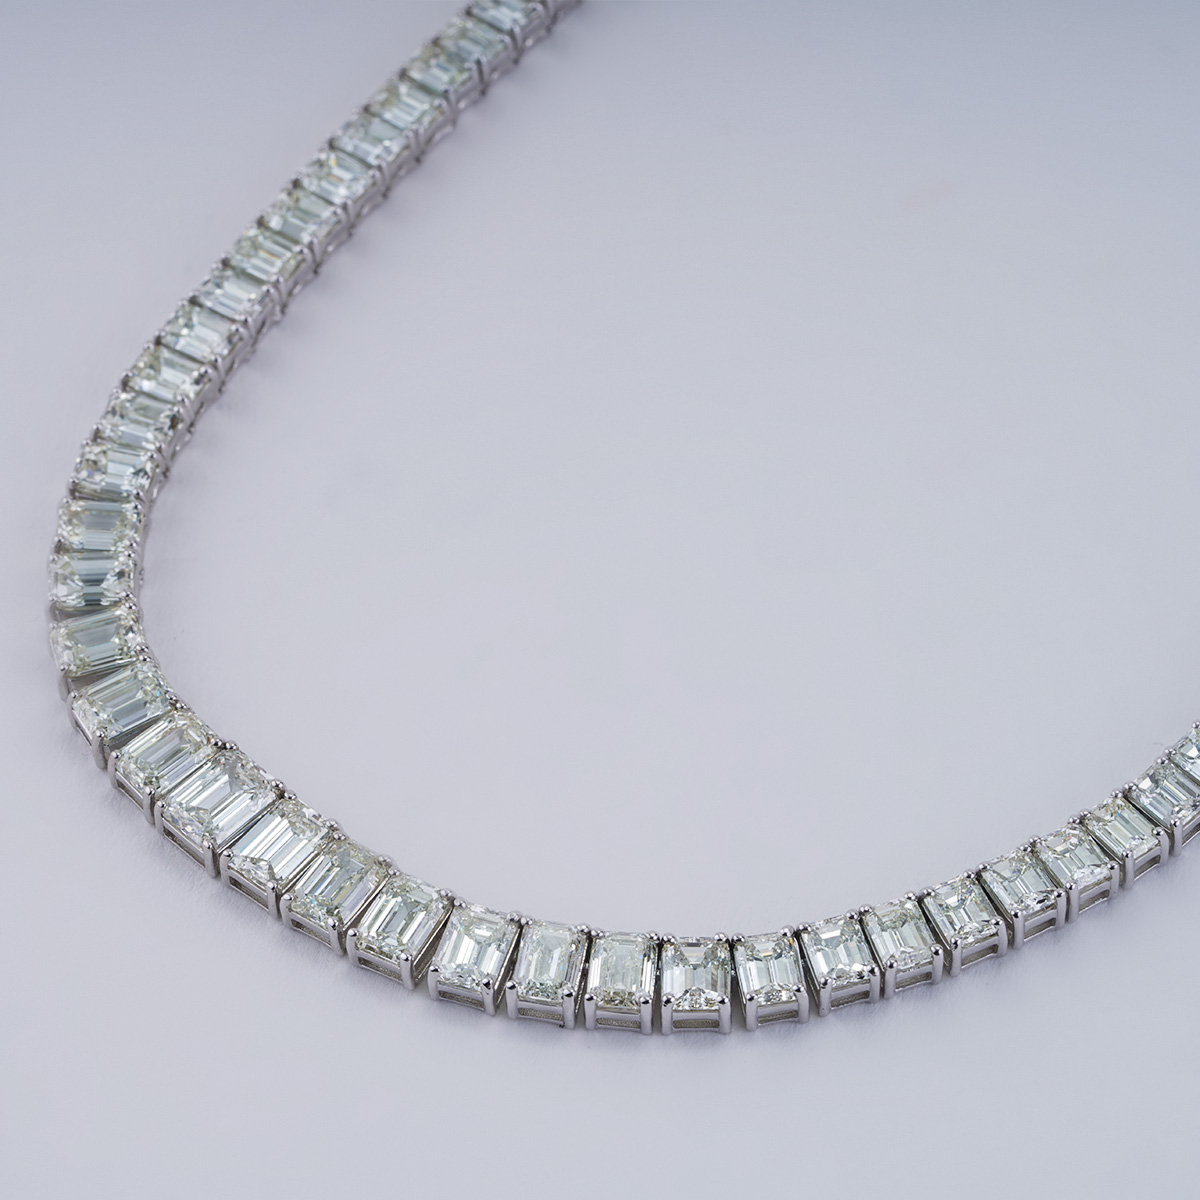 Bezel Set Emerald Cut Tennis Necklace - The Clear Cut Collection